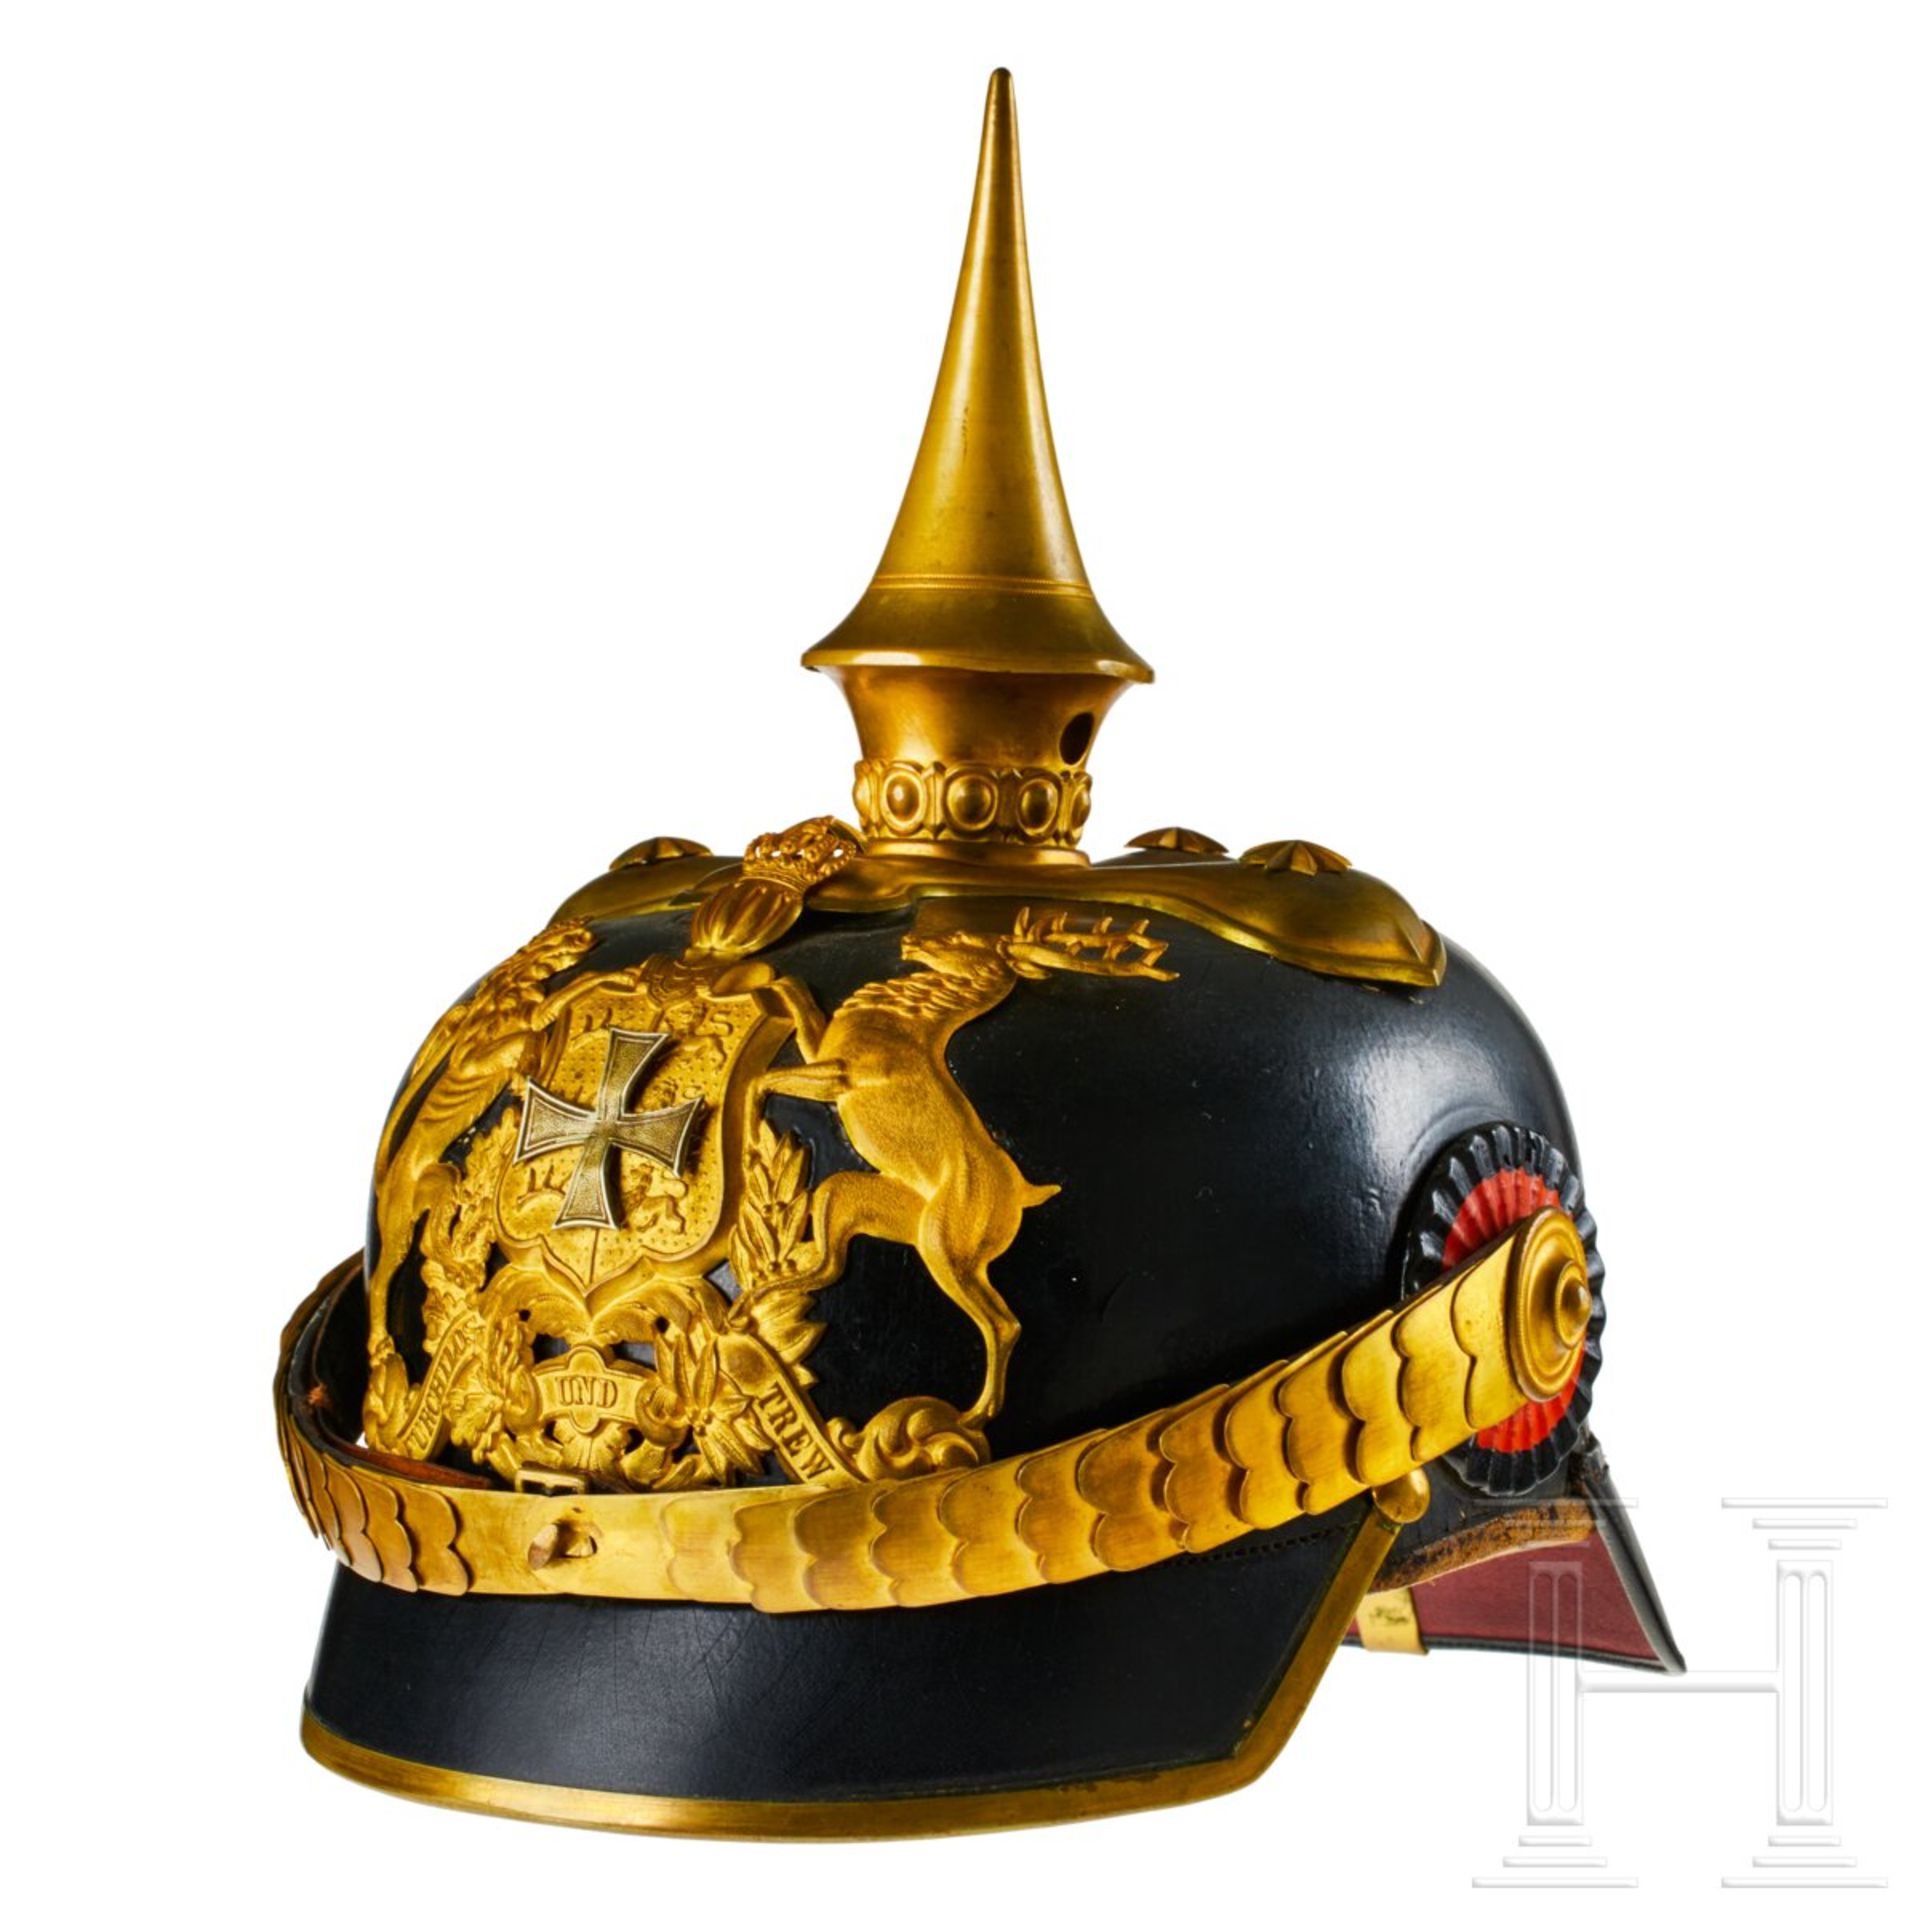 A helmet for IR 122 Württemberg Reserve Officers